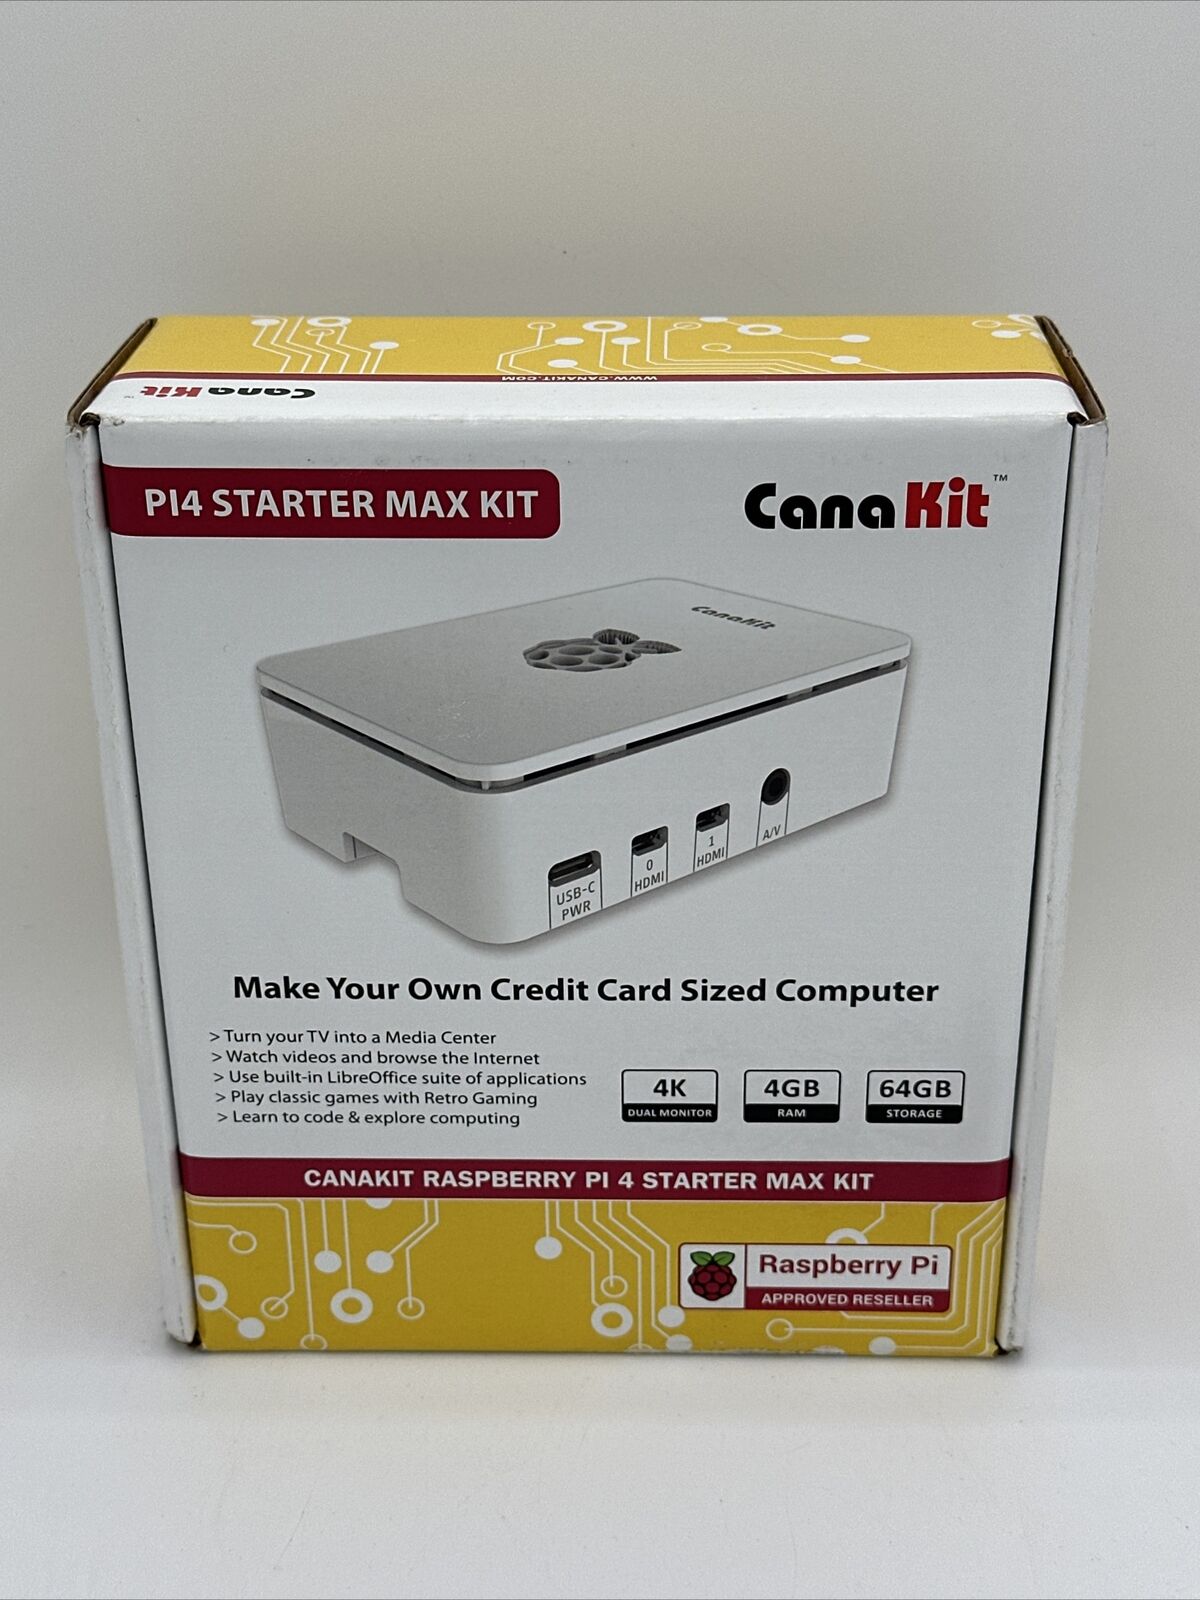 CanaKit - Raspberry Pi 4 Starter MAX Kit 4GB RAM - 64GB Storage - White - New